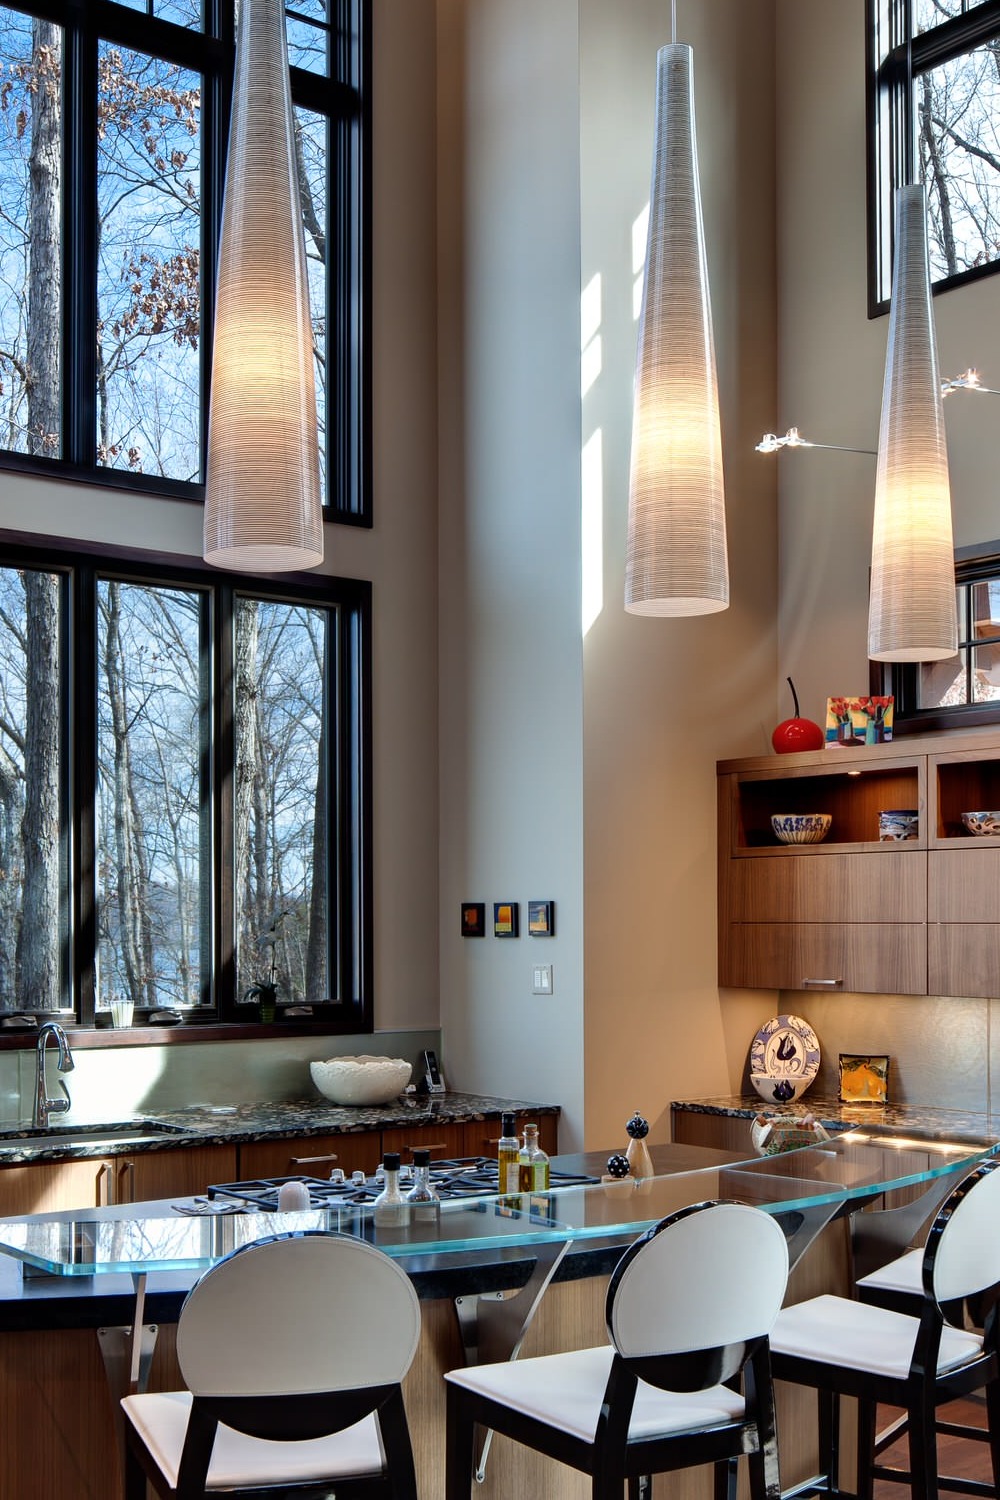 Flat Panel Brown Cabinets Pendant Lightings GreenBacksplash Tiles Dark Wood Floor Granite Countertops